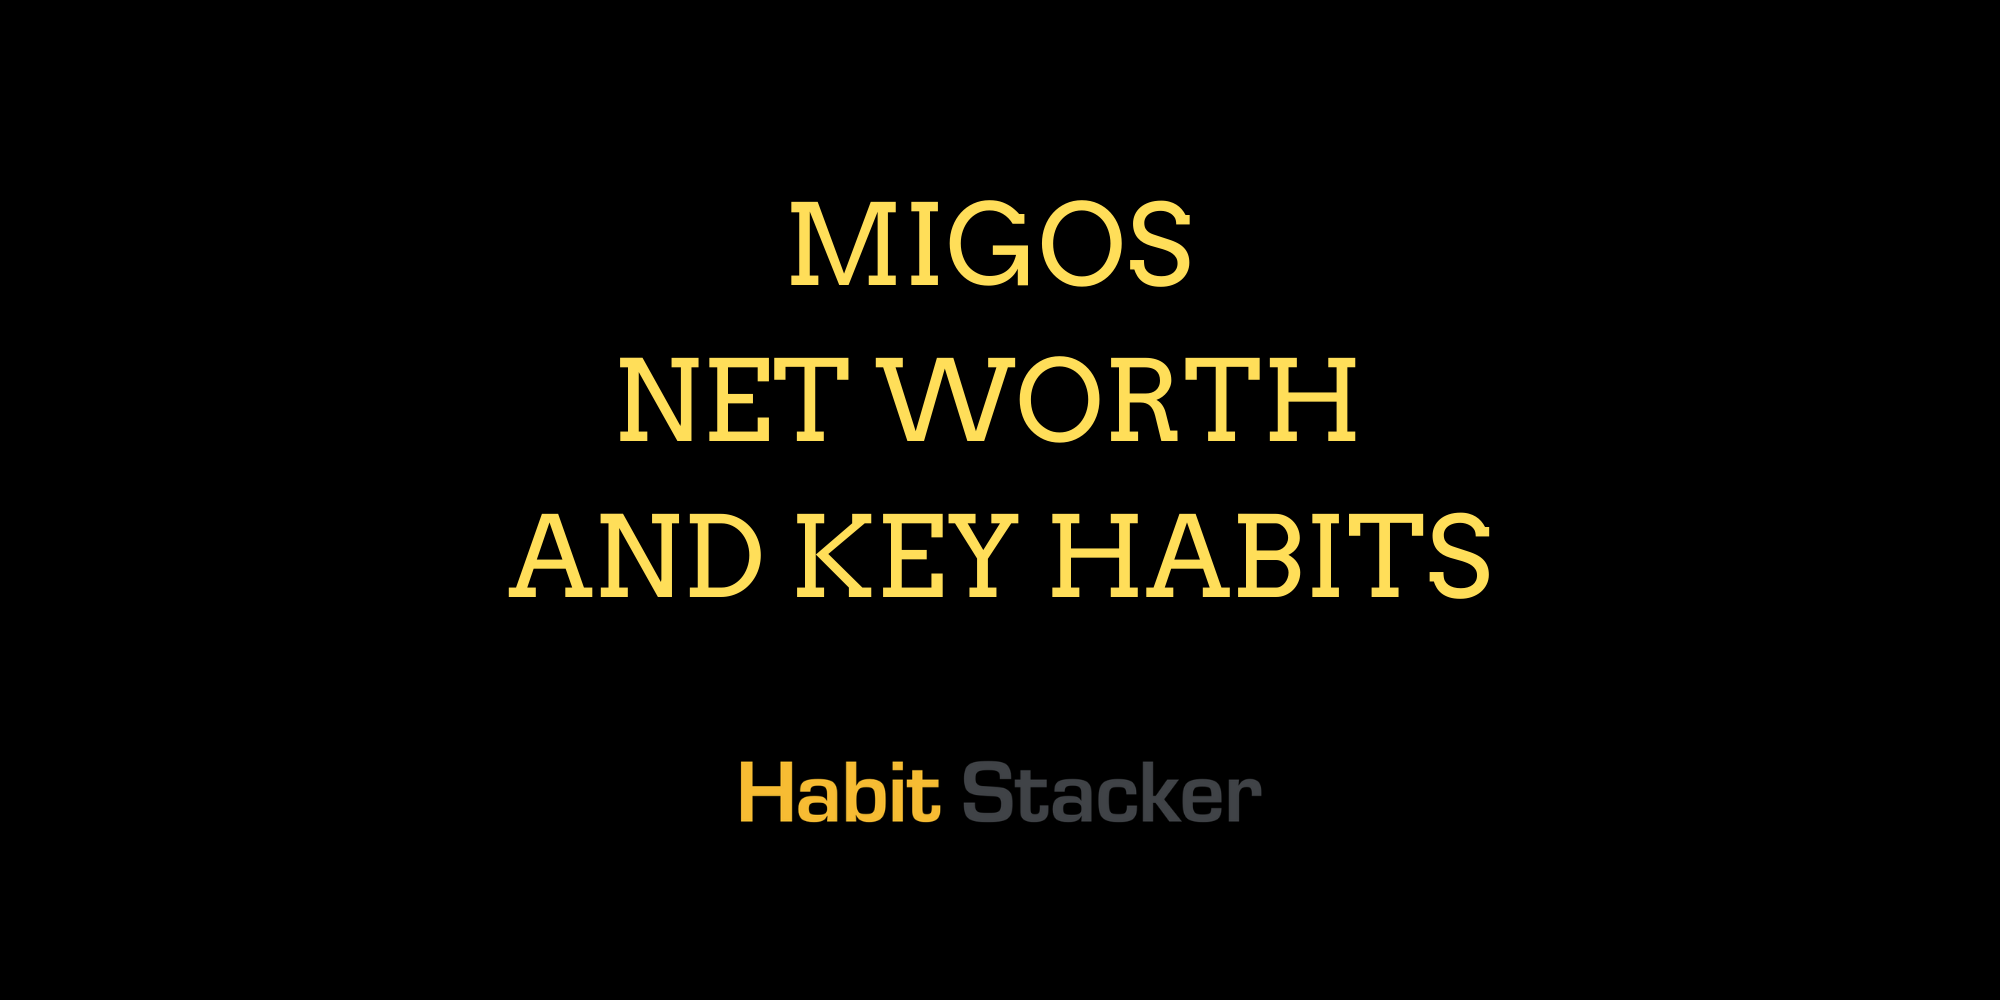 Migos Net Worth and Key Habits